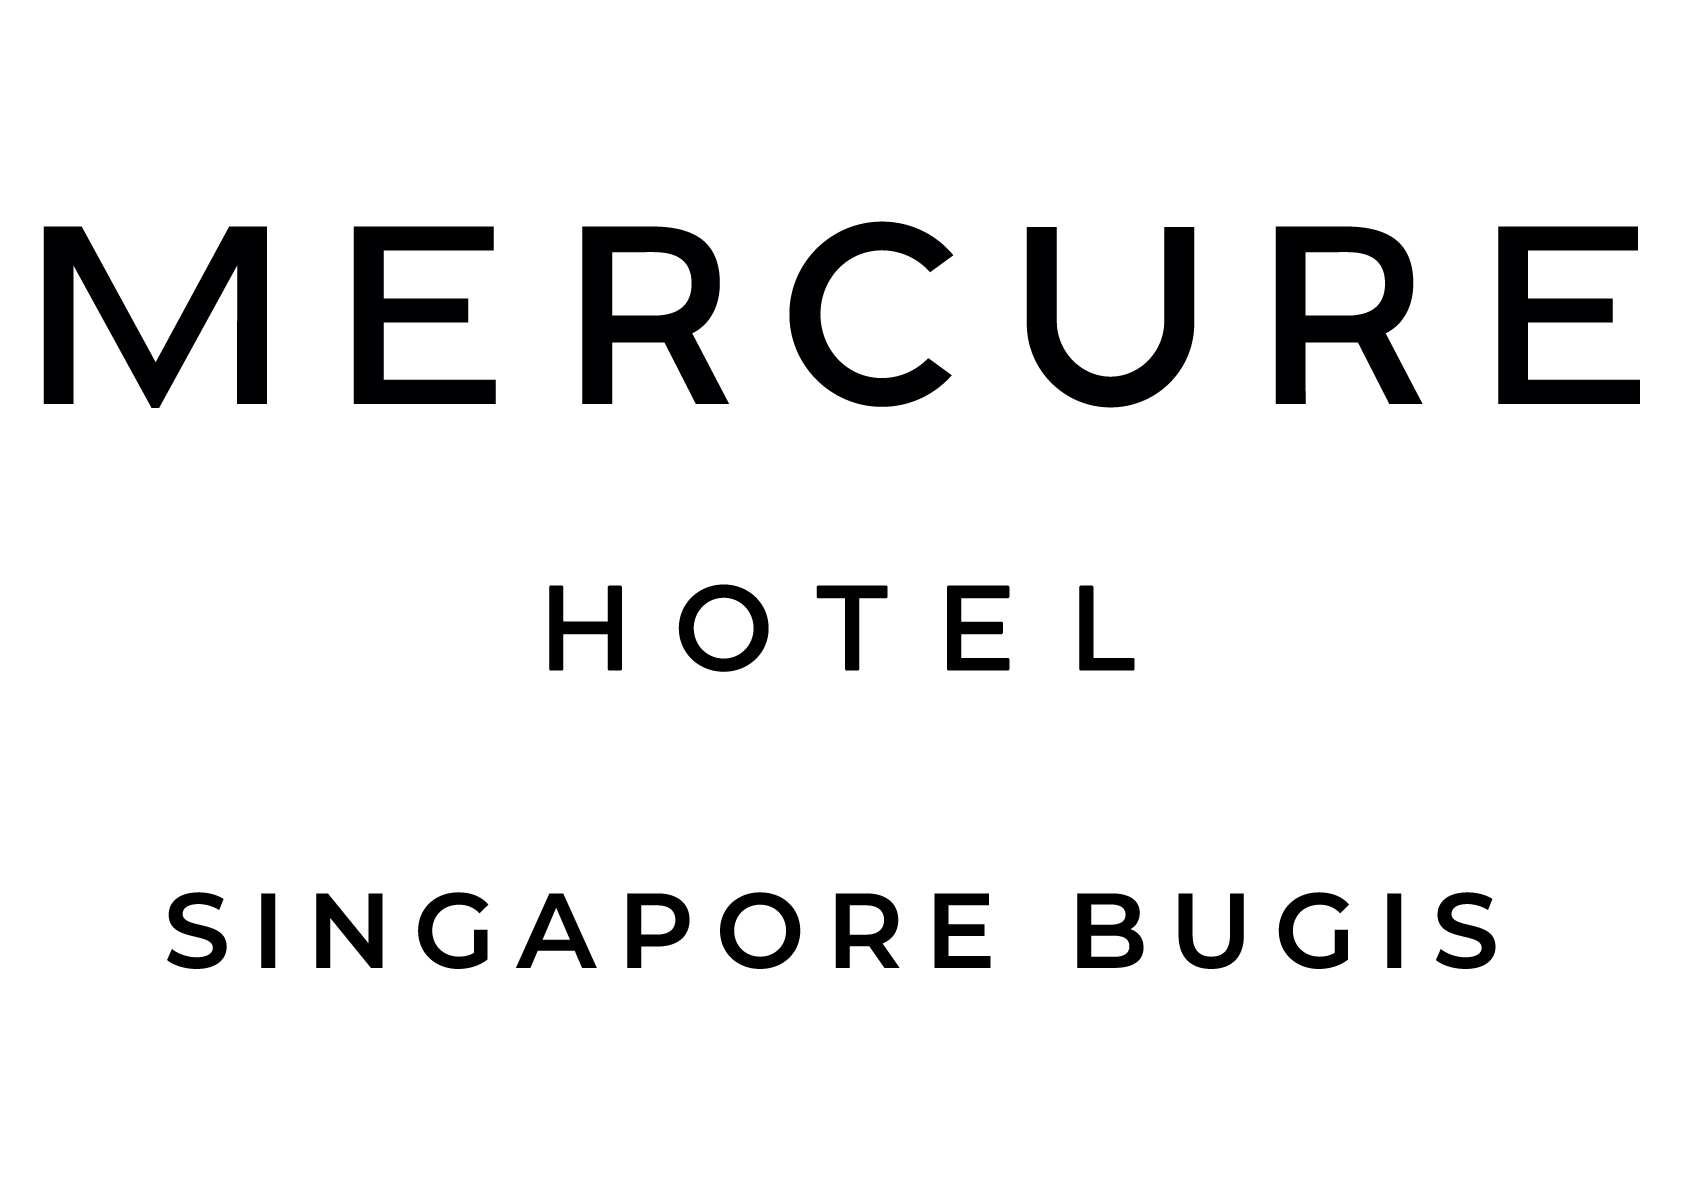 Mercure Singapore Bugis company logo